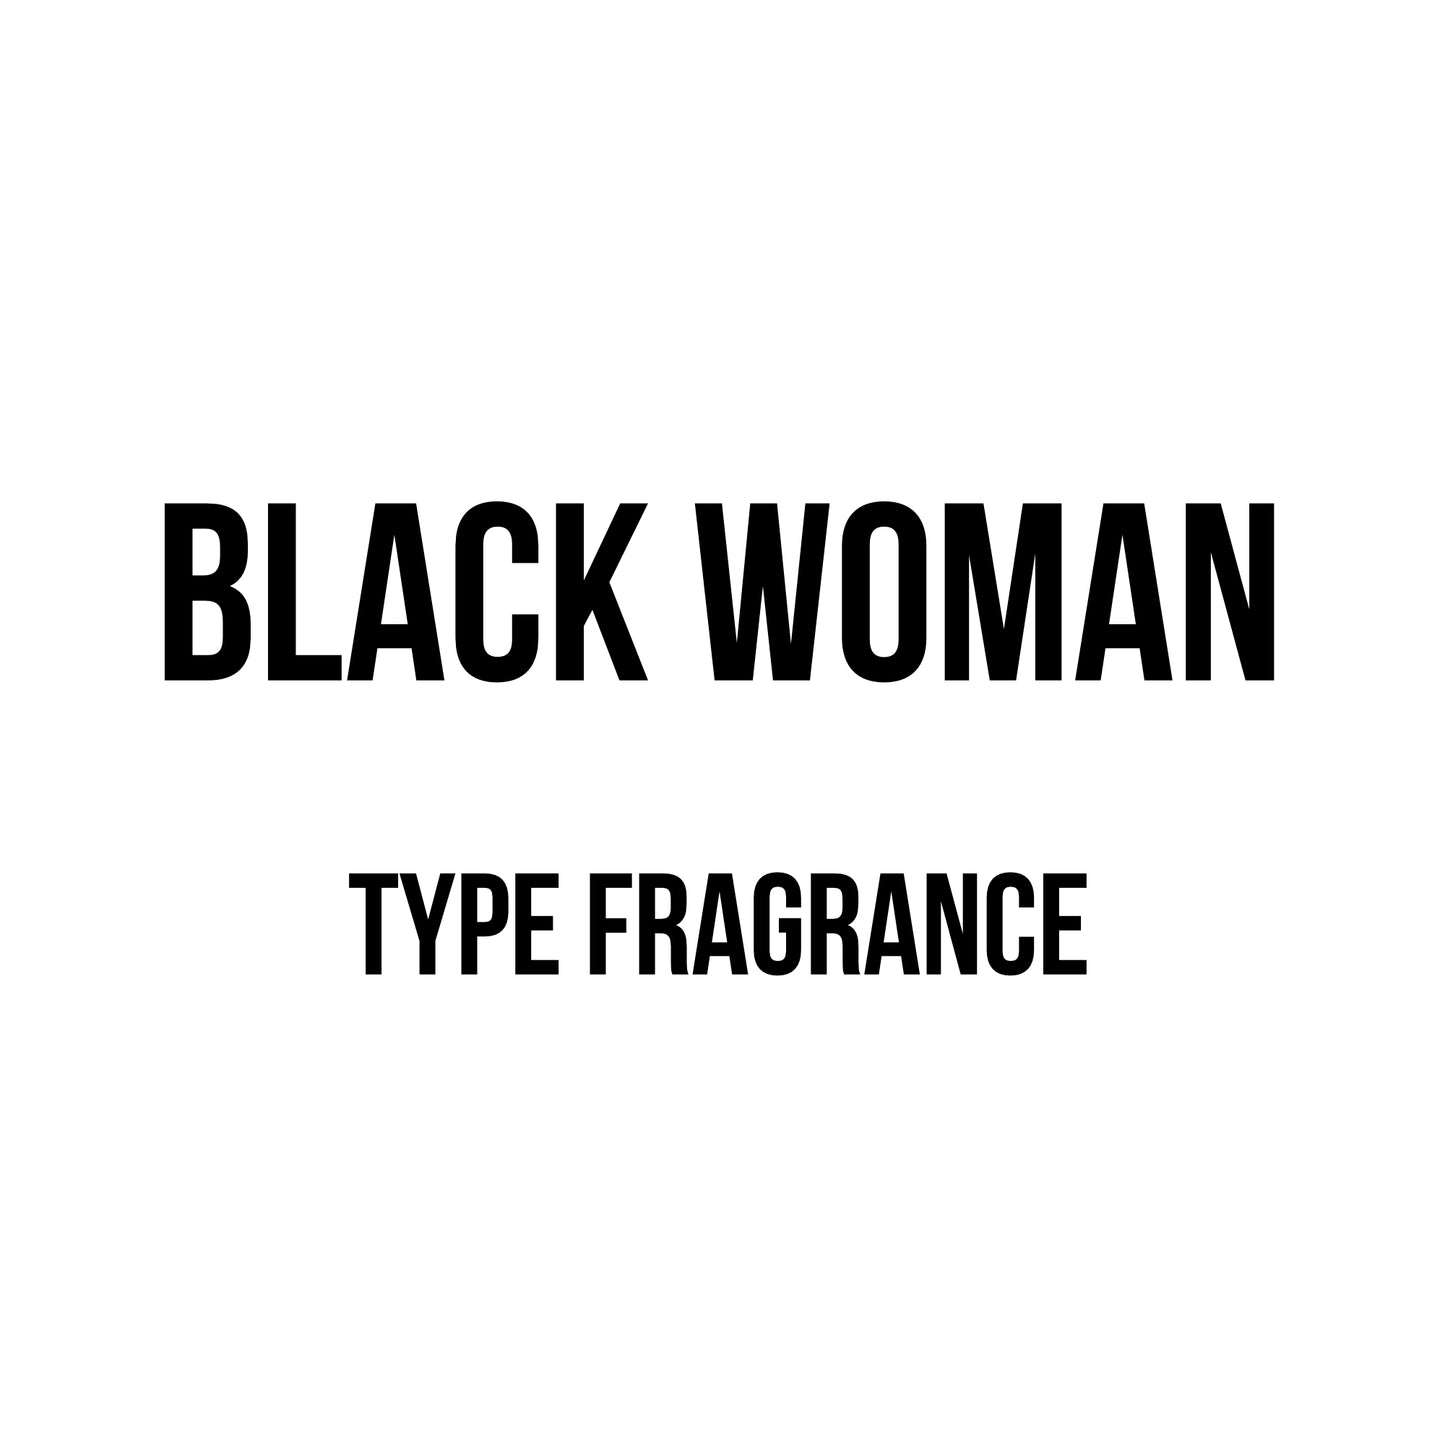 Black Woman Type Fragrance